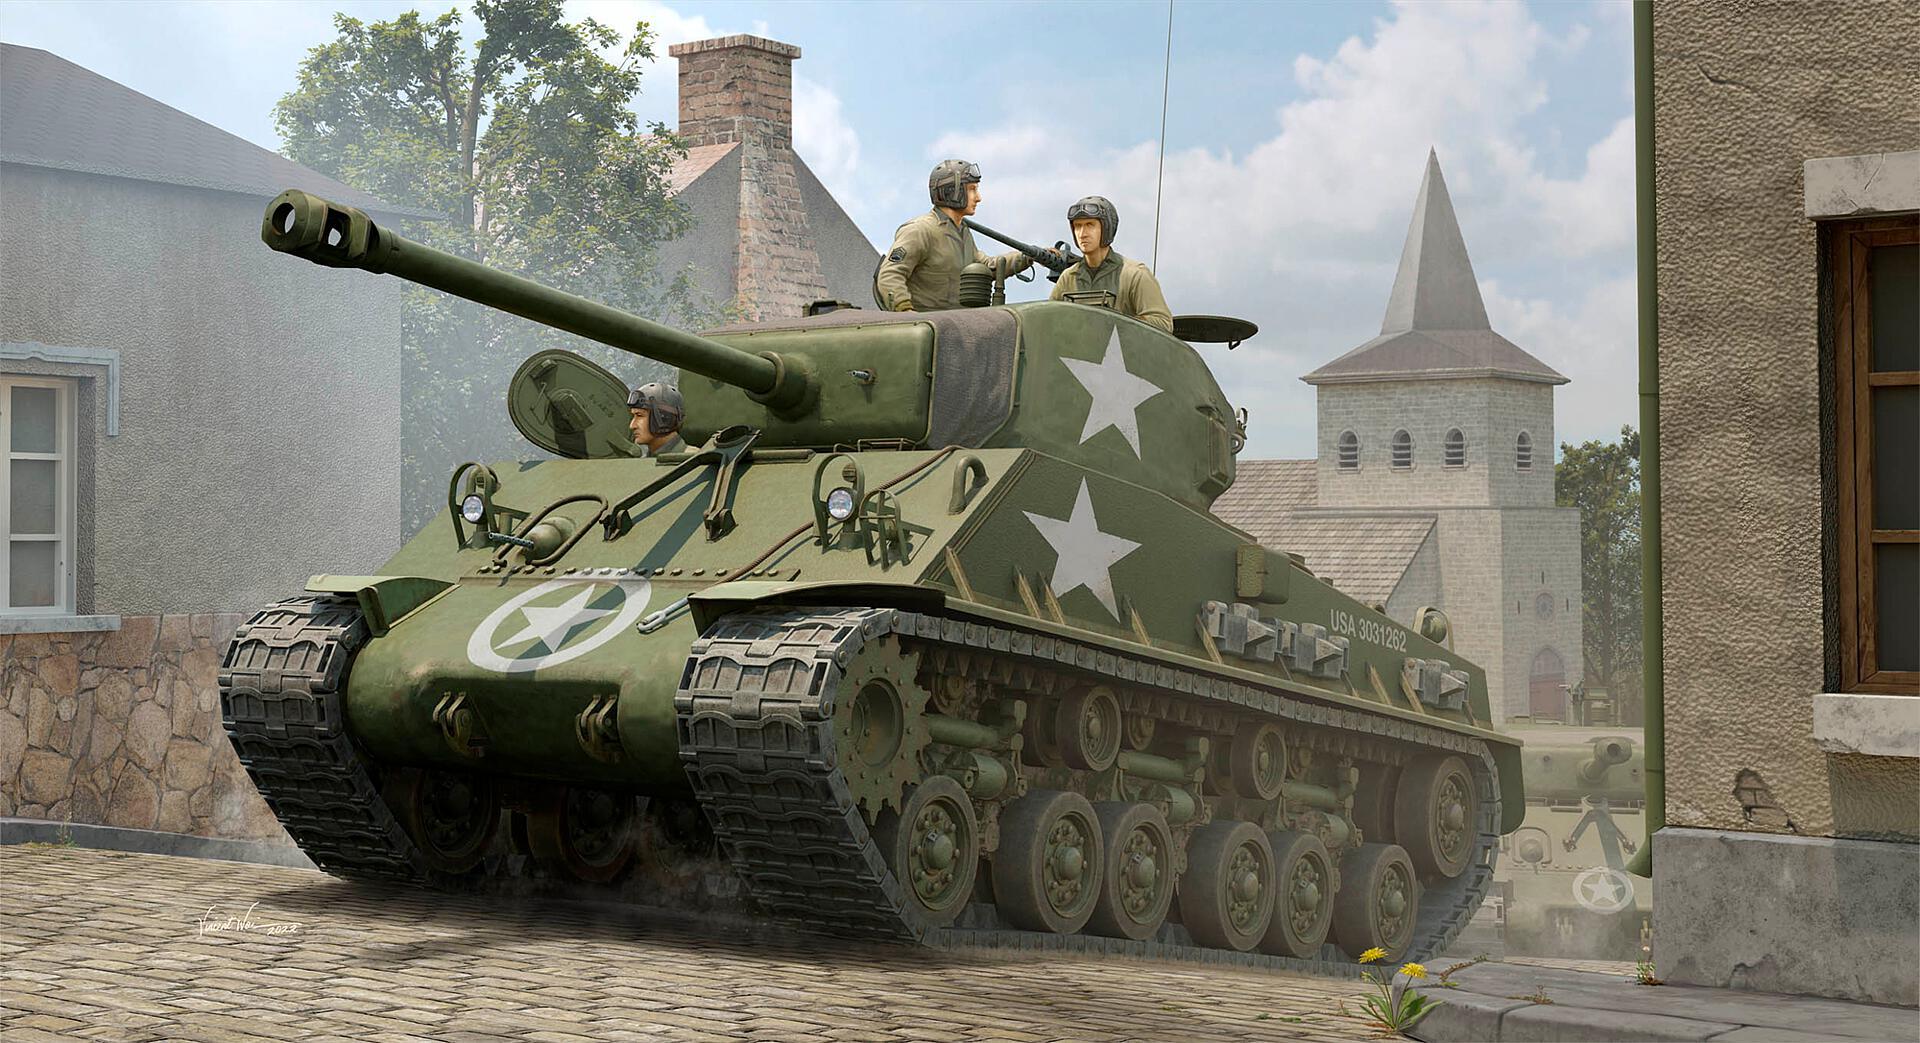 116 M4a3e8 Sherman Militär I Love Kit Marken Faller Online Shop